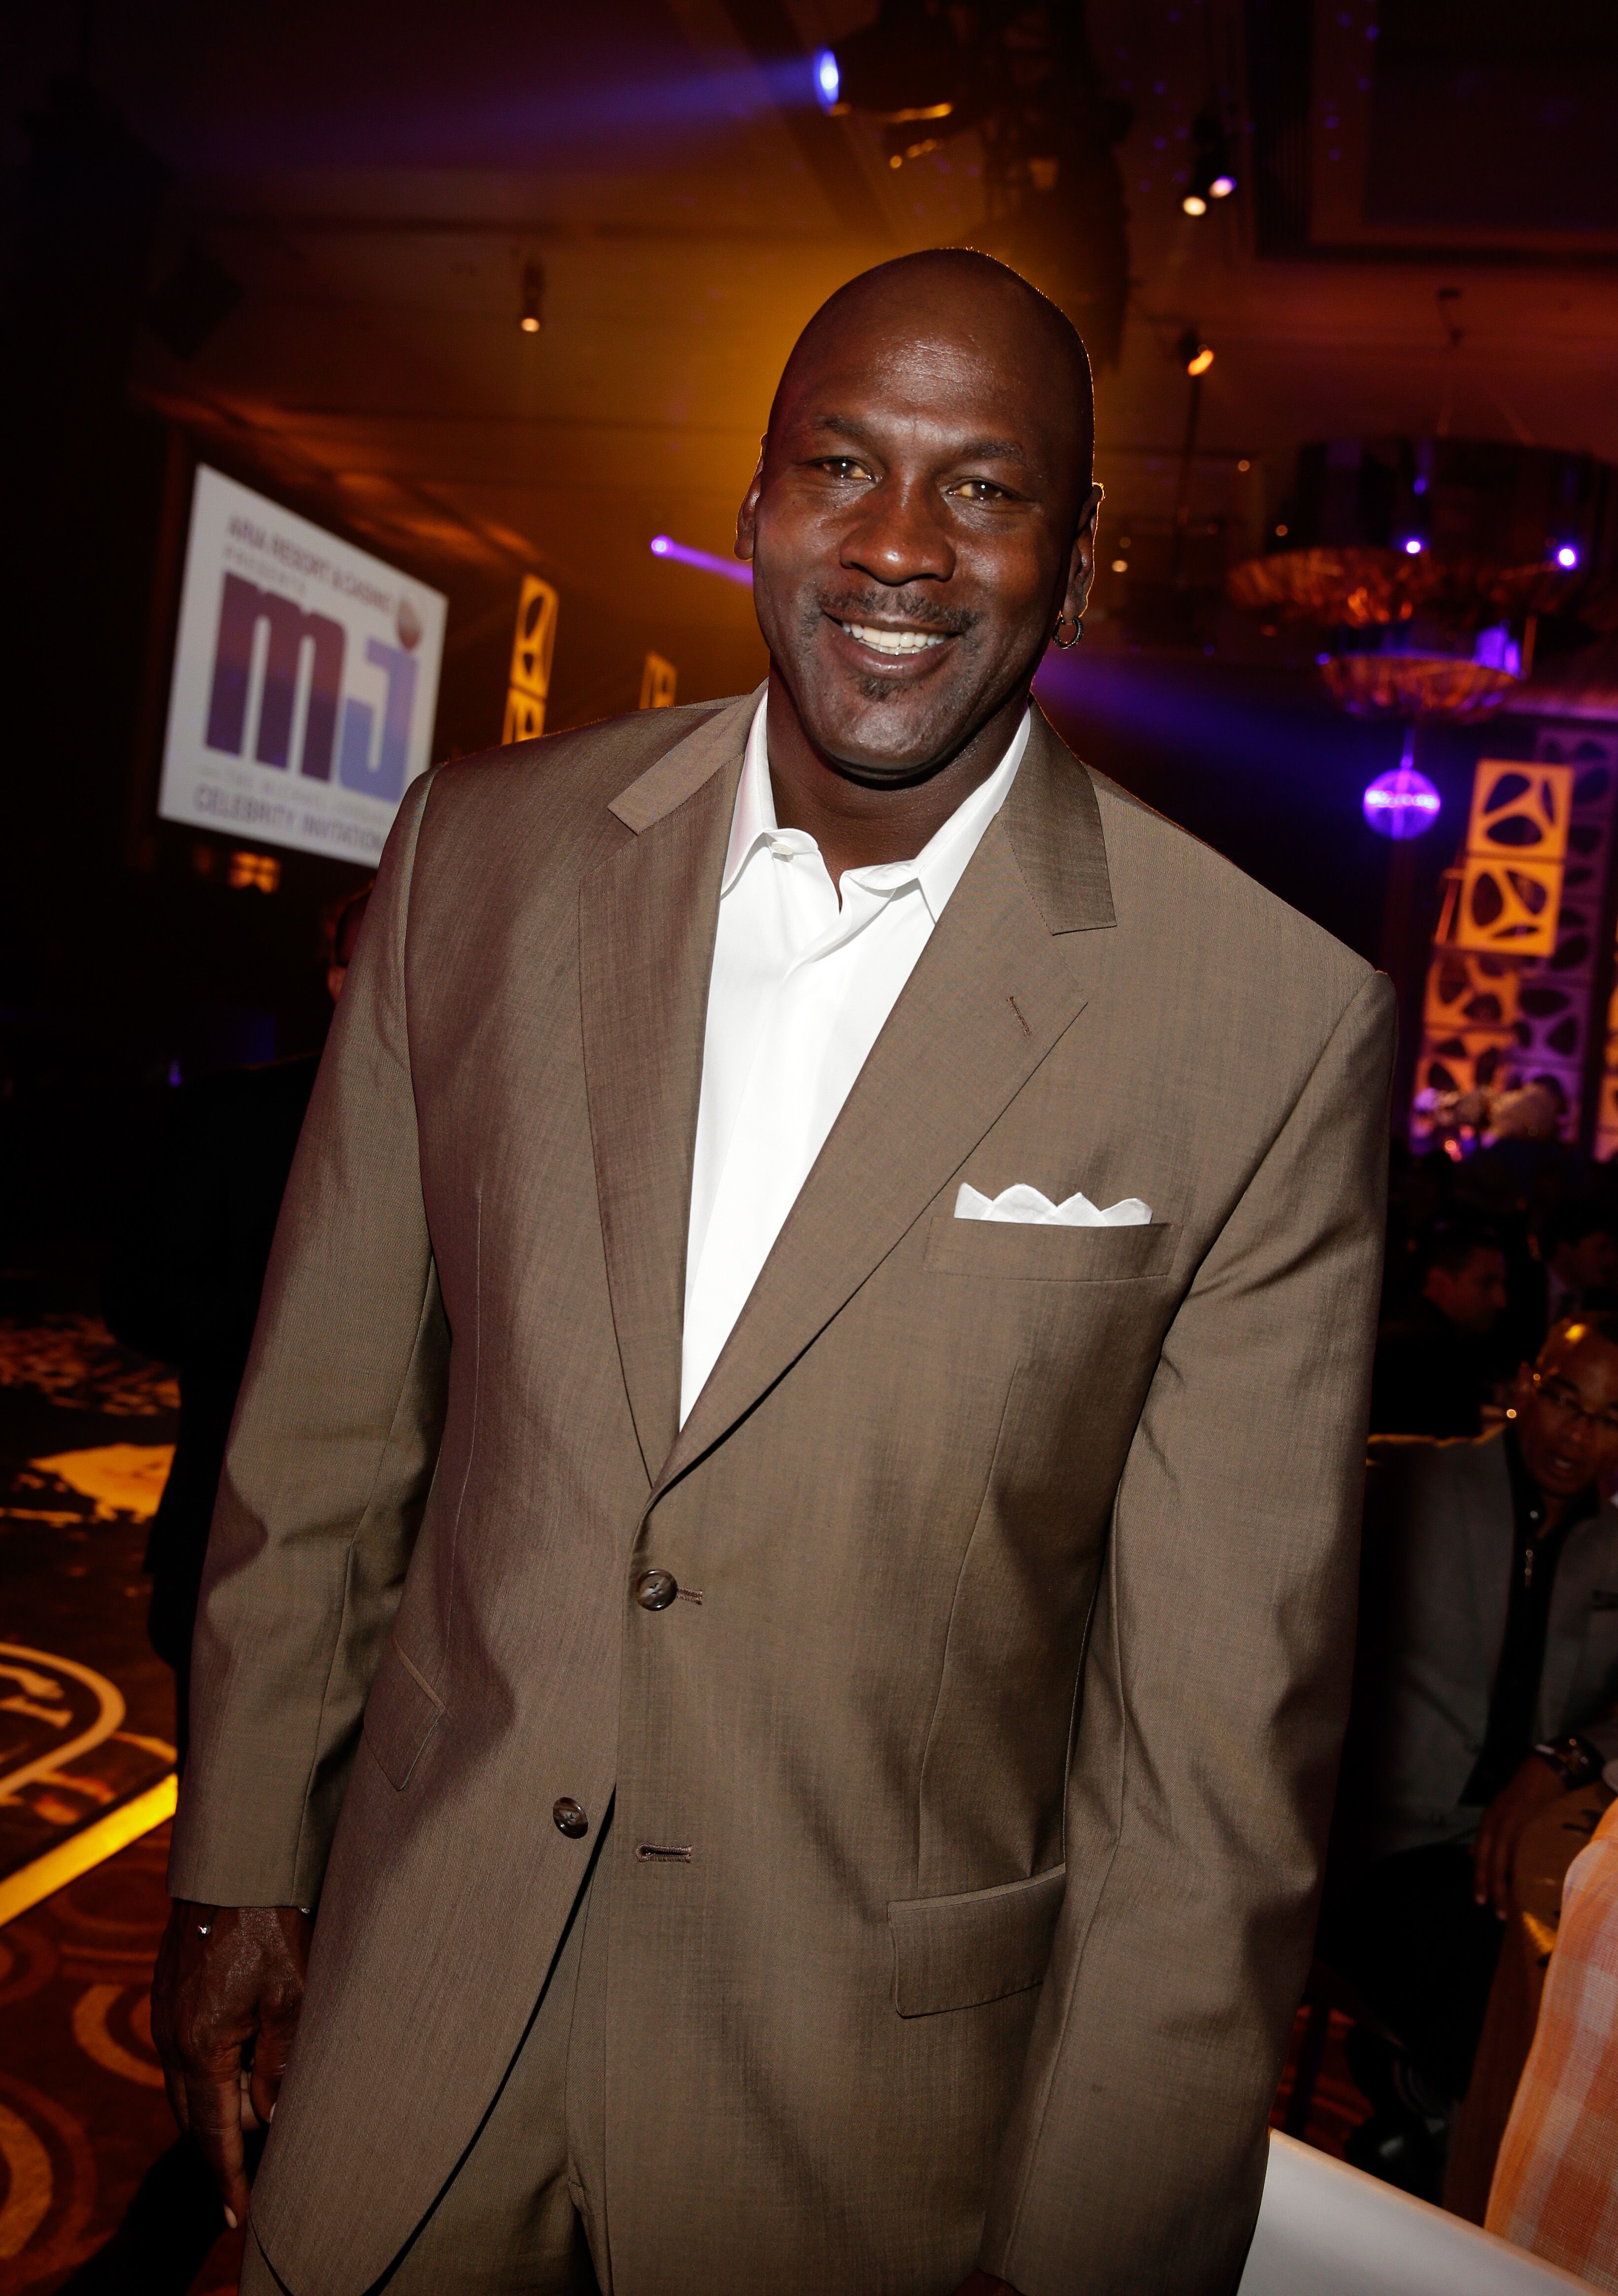  Michael Jordan attends the 13th annual Michael Jordan Celebrity Invitational gala. | Source: Getty Images